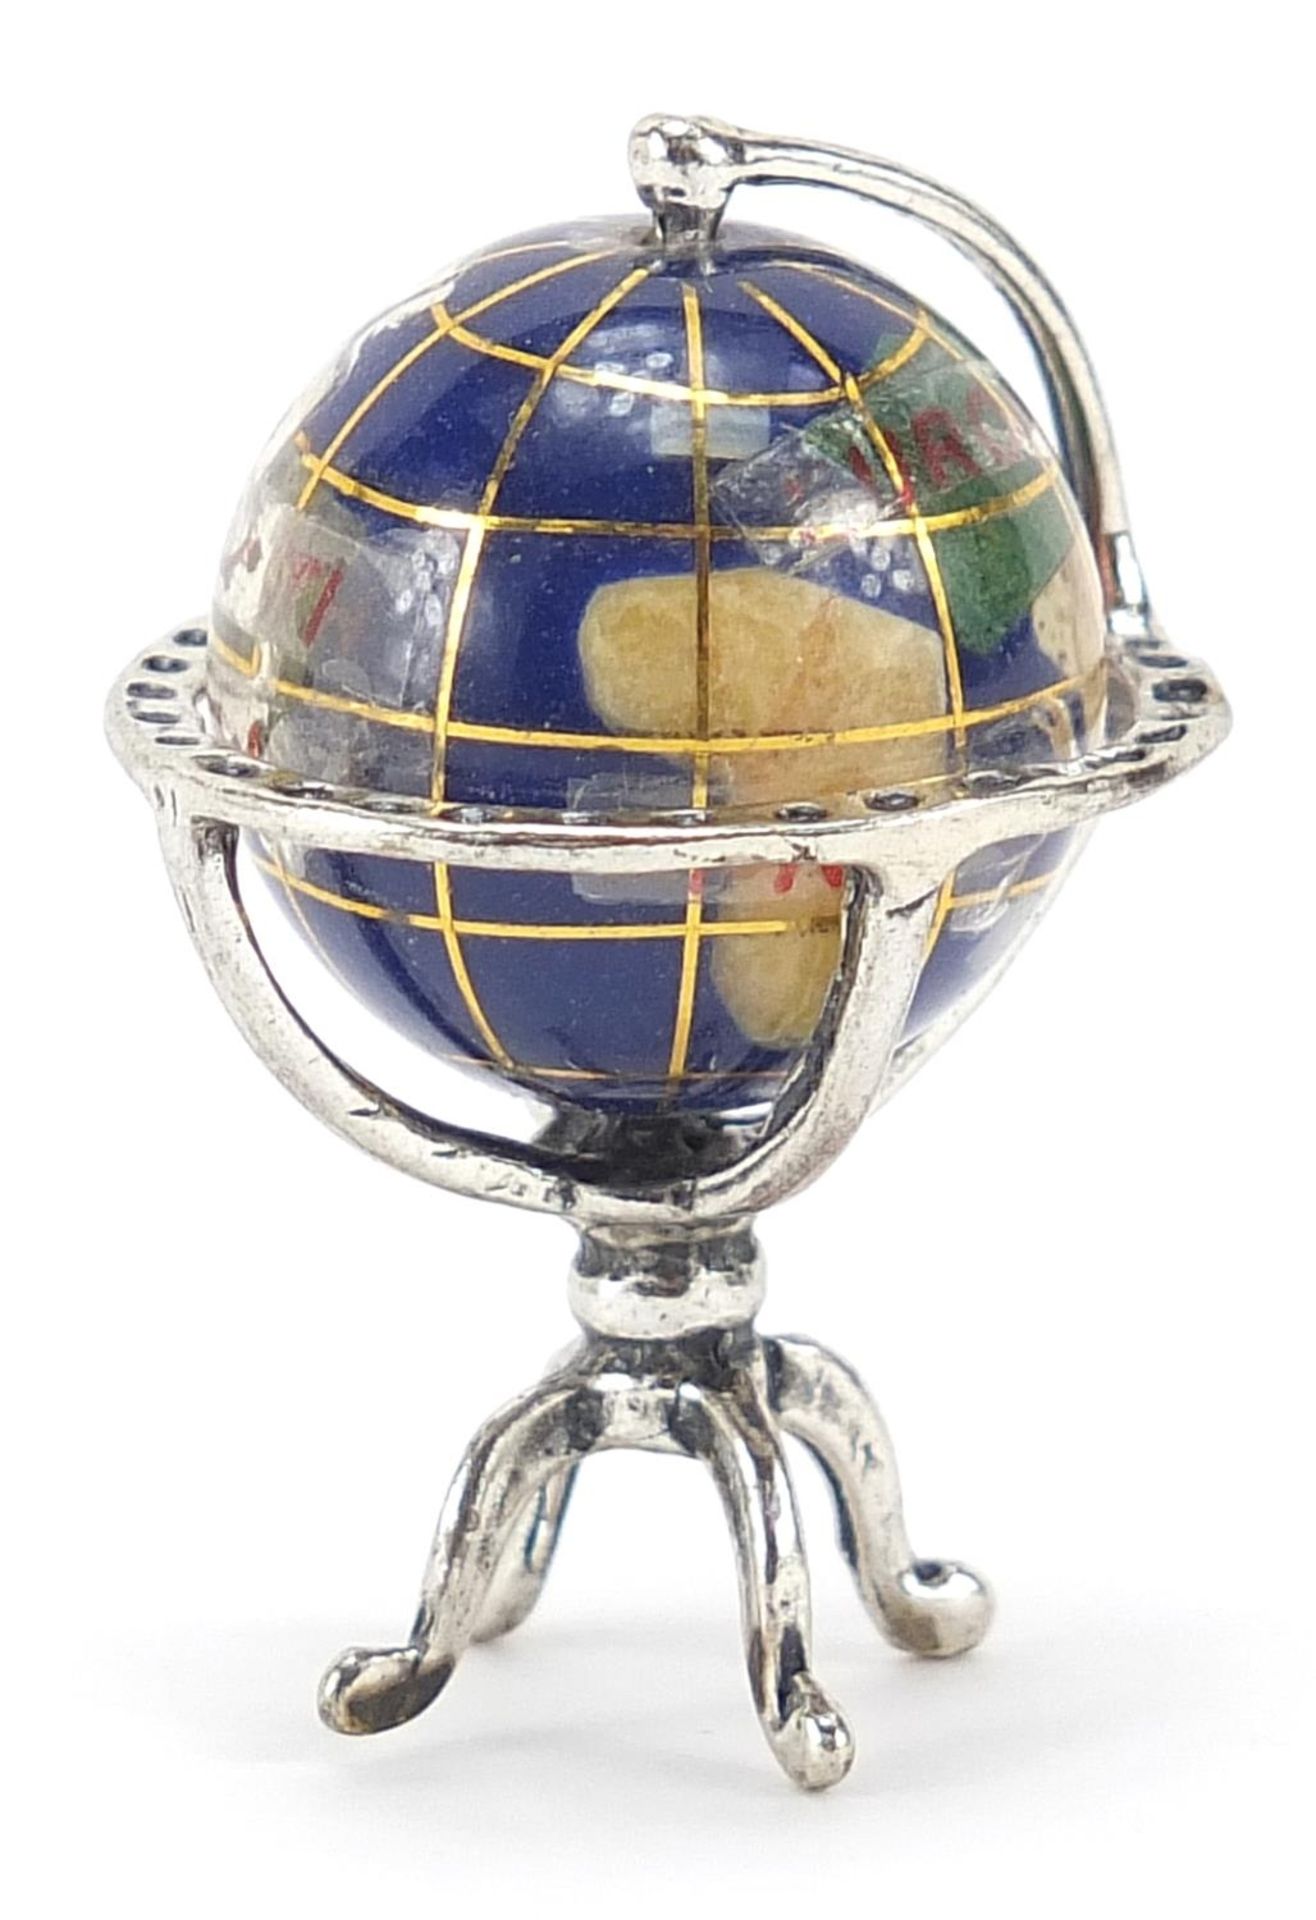 Miniature silver and semi precious stone table globe, 3.5cm high, 11.5g